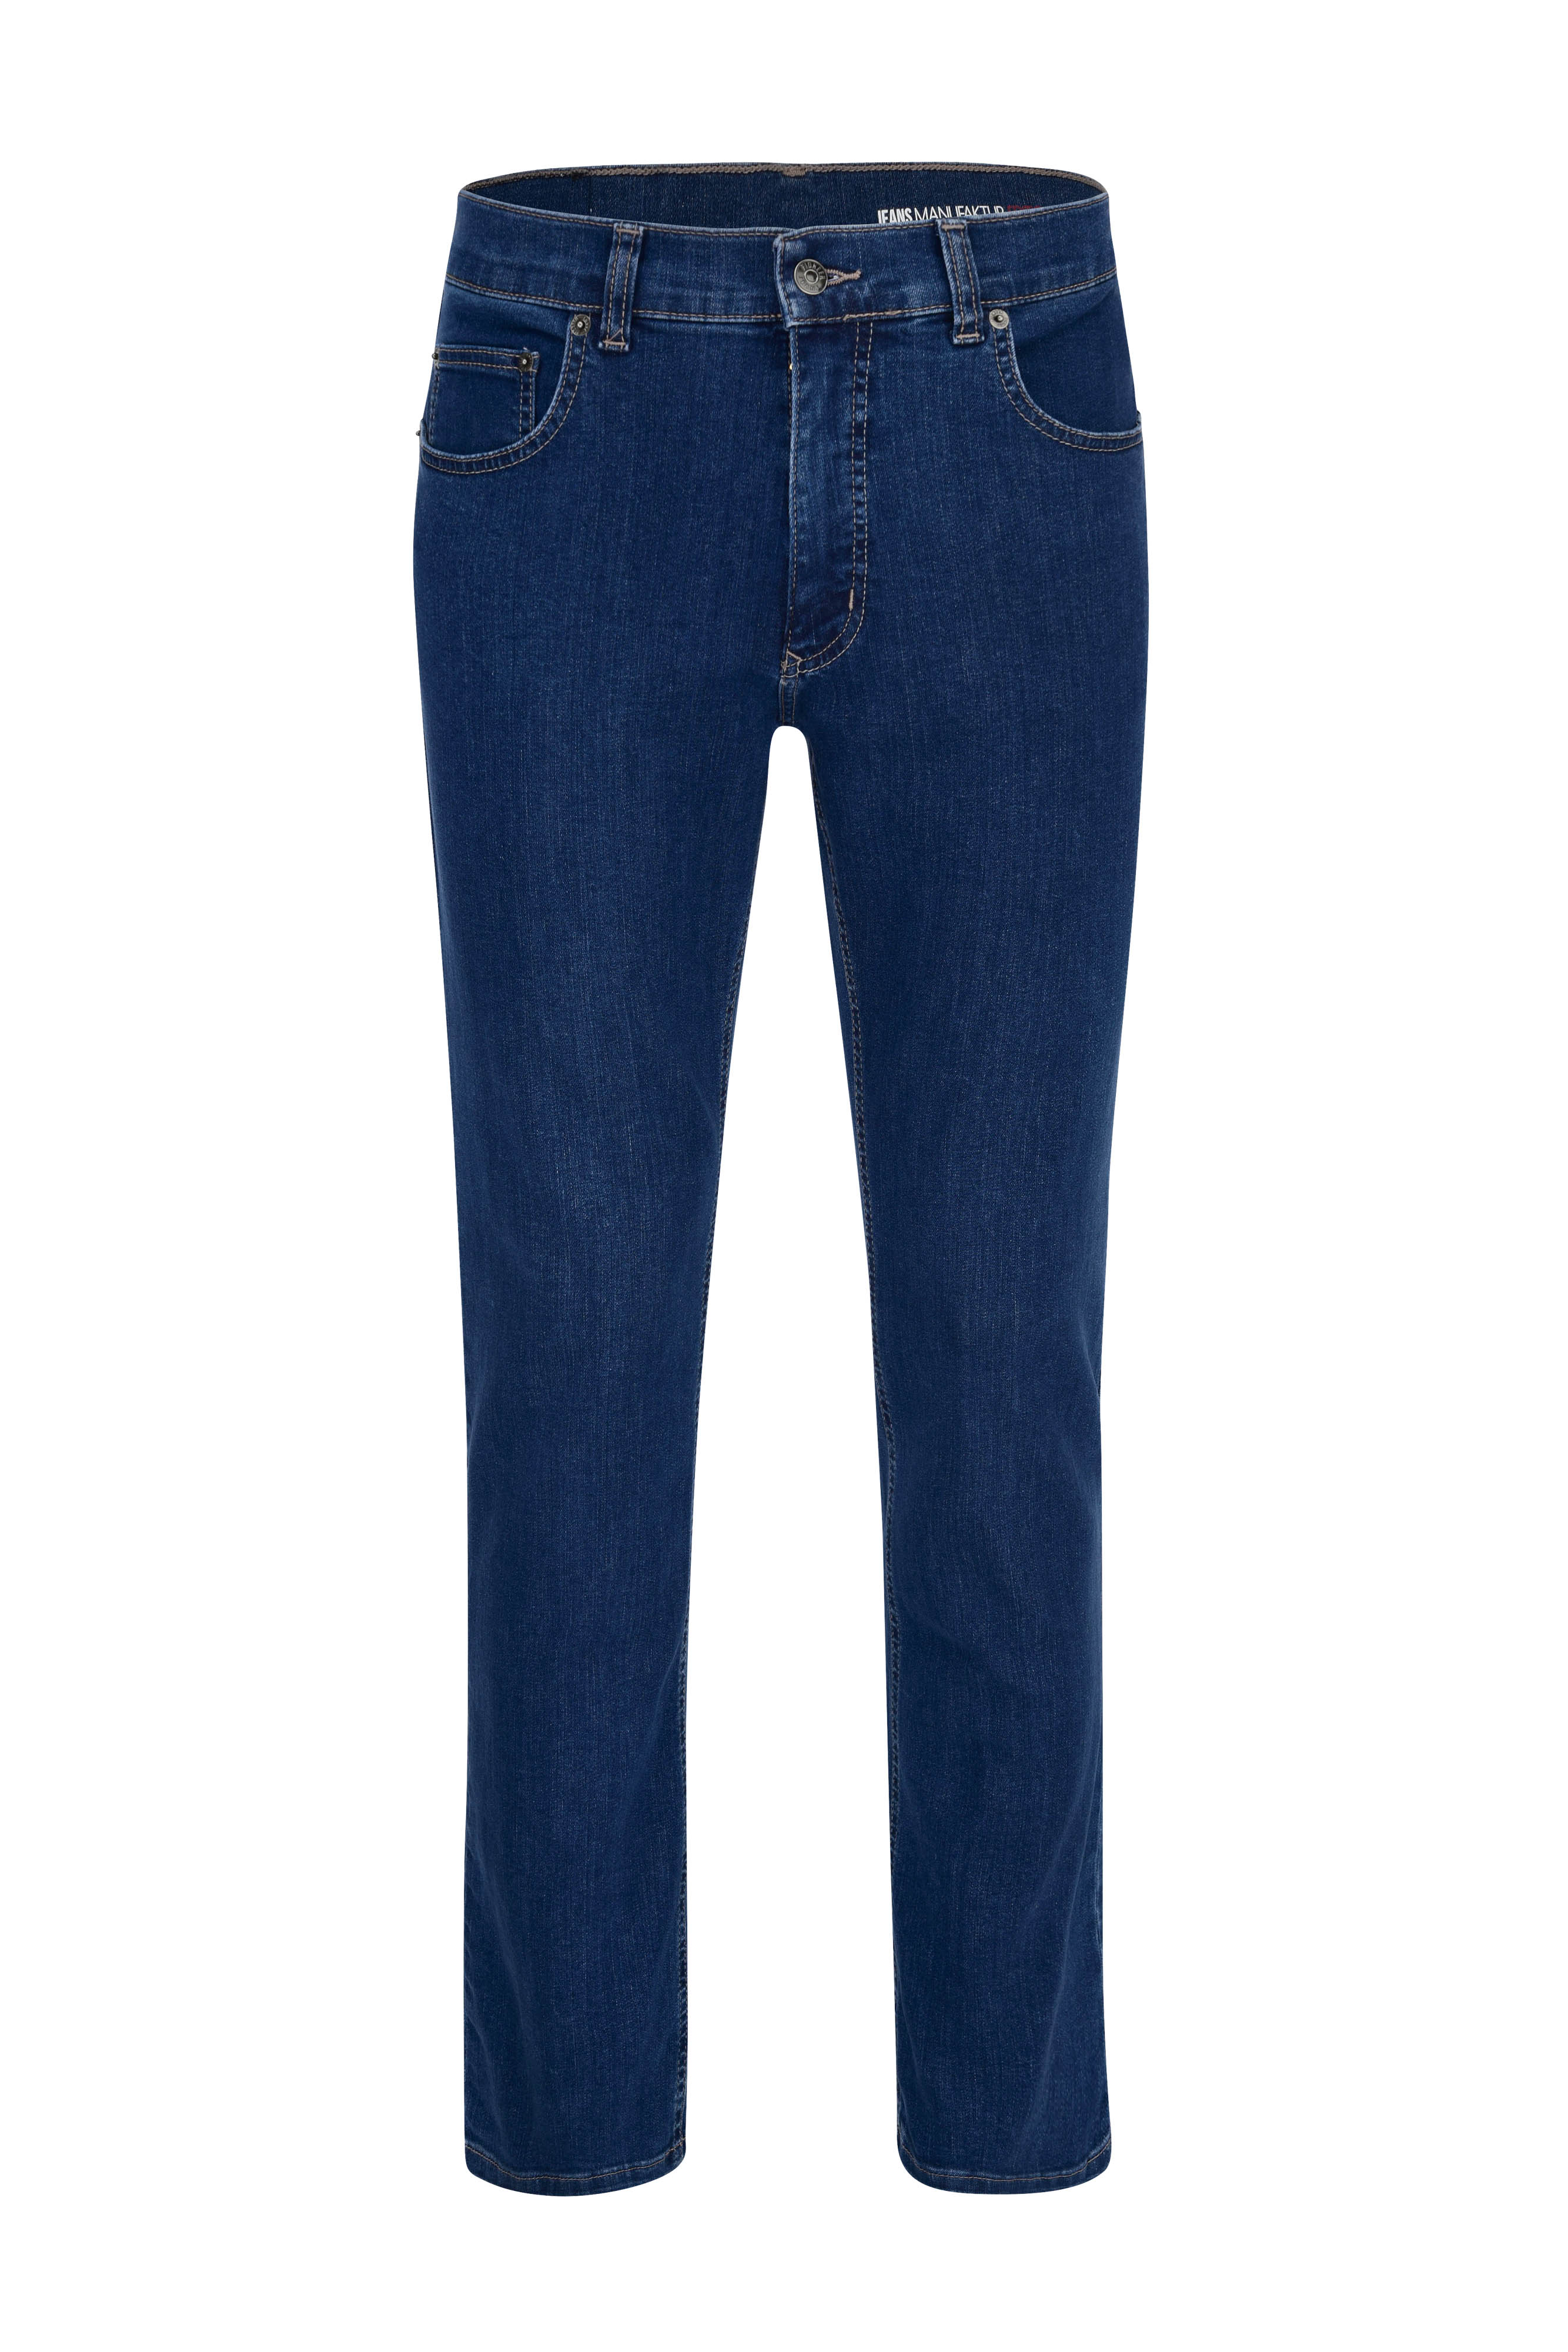 PIONEER RON premium mid blue 1184 9818.05 - Jeans Manufaktur Edition ...